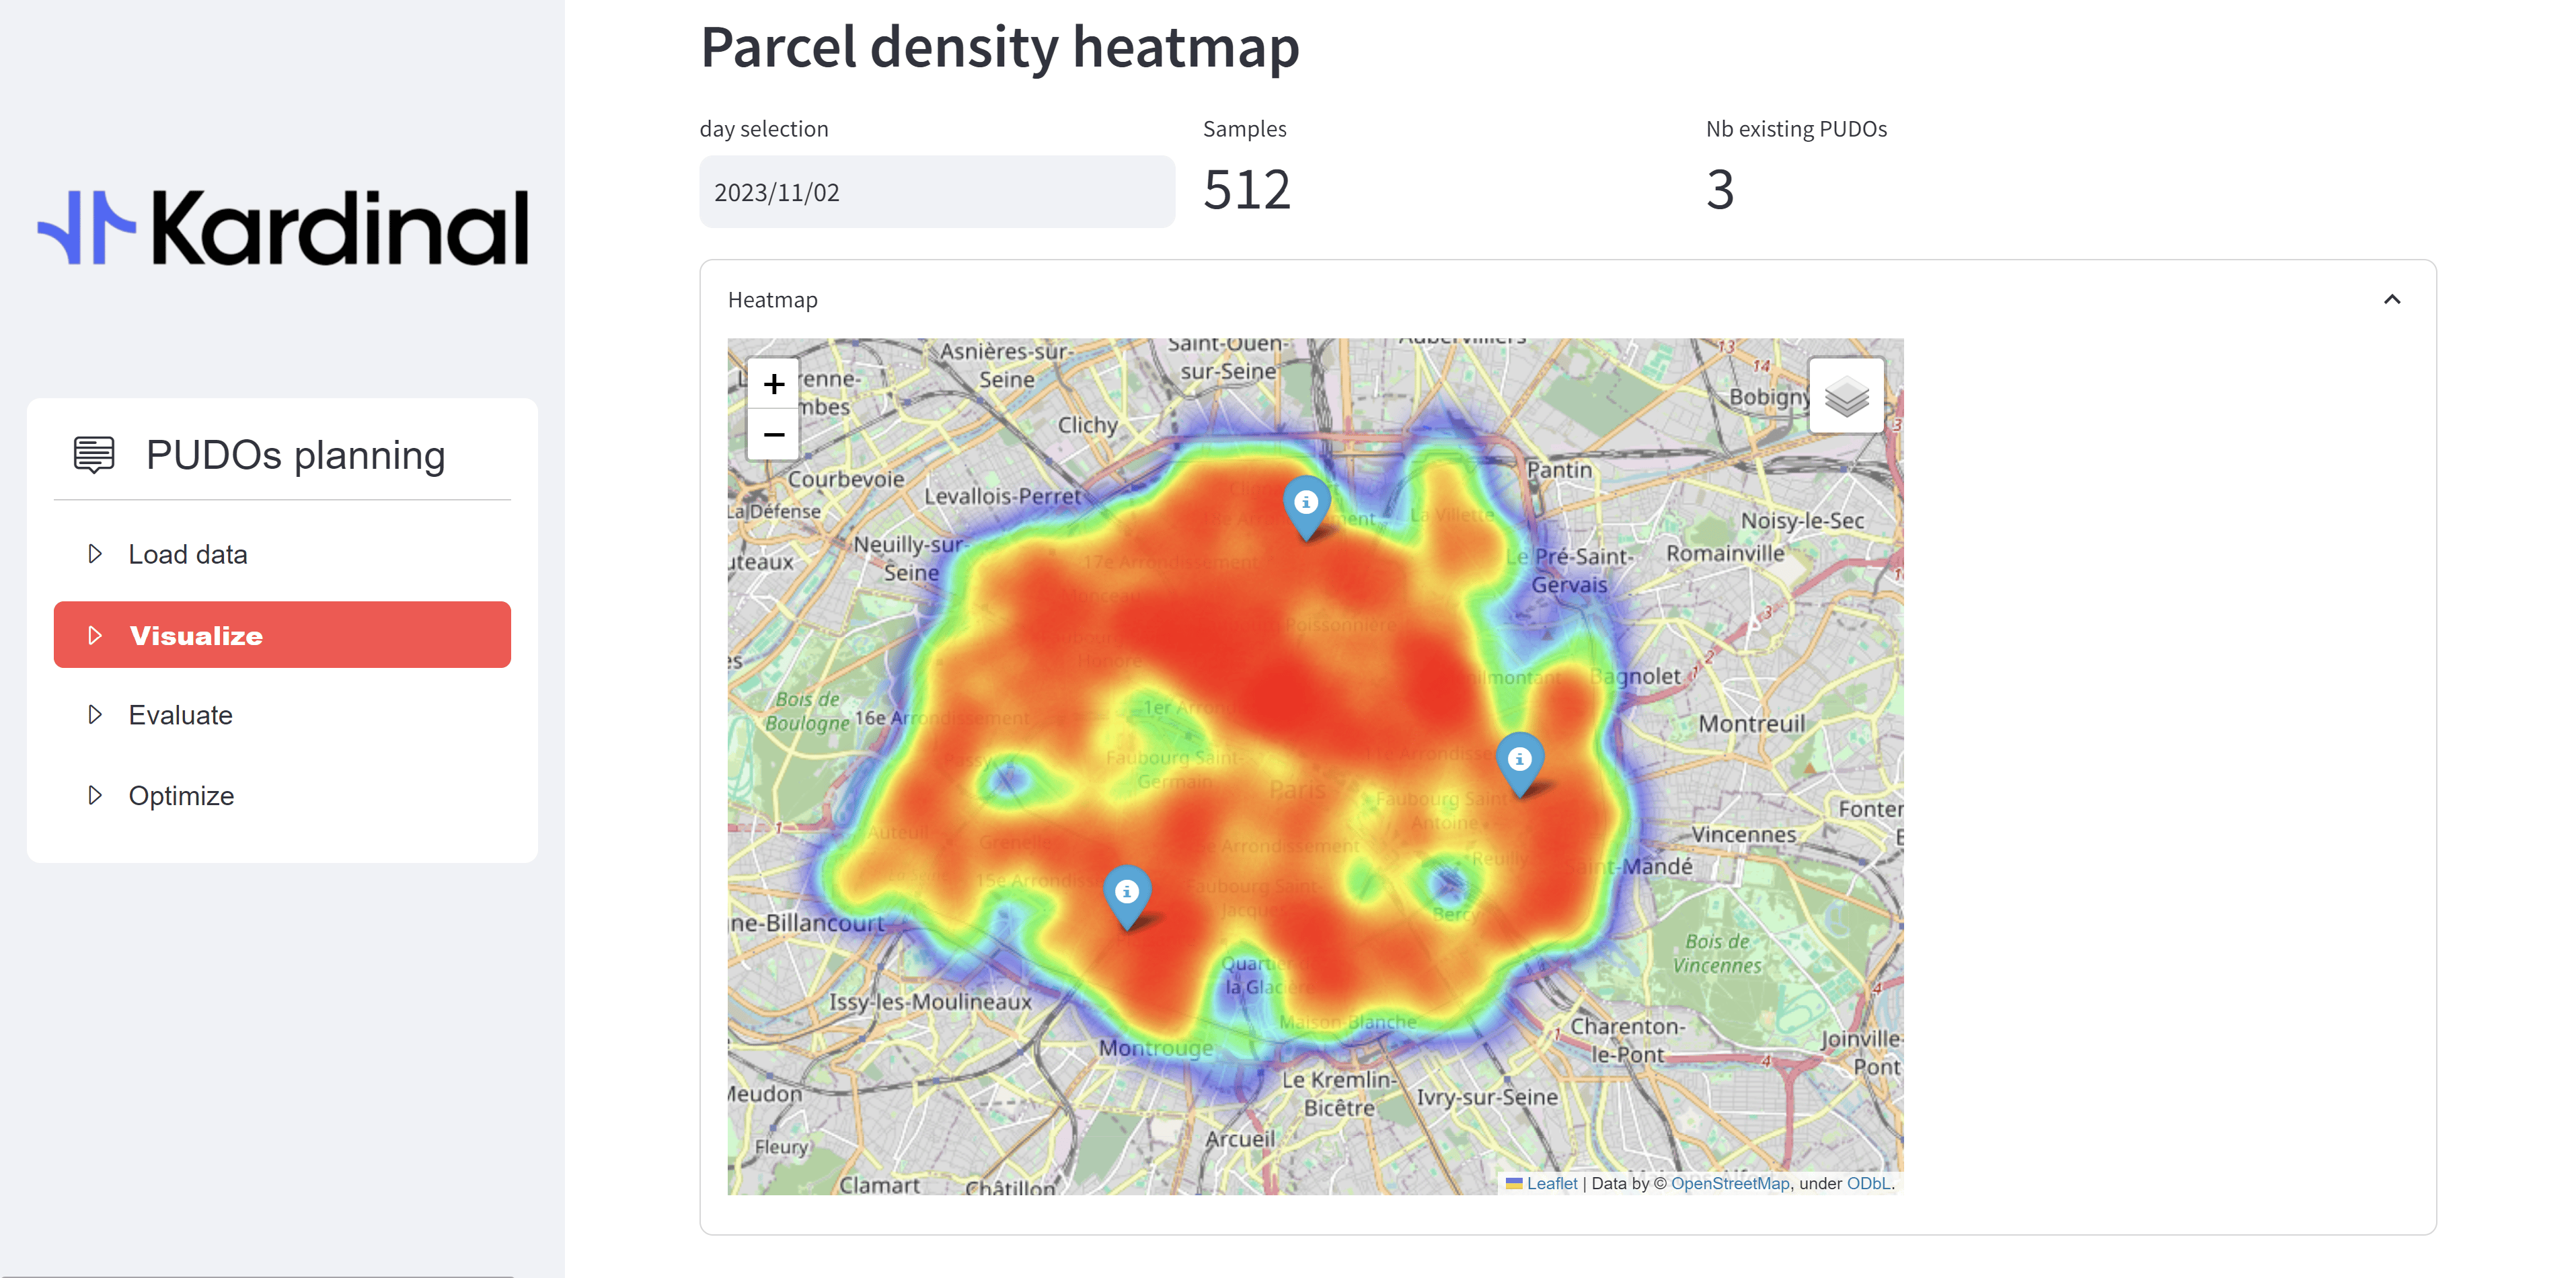 PUDO density heatmap